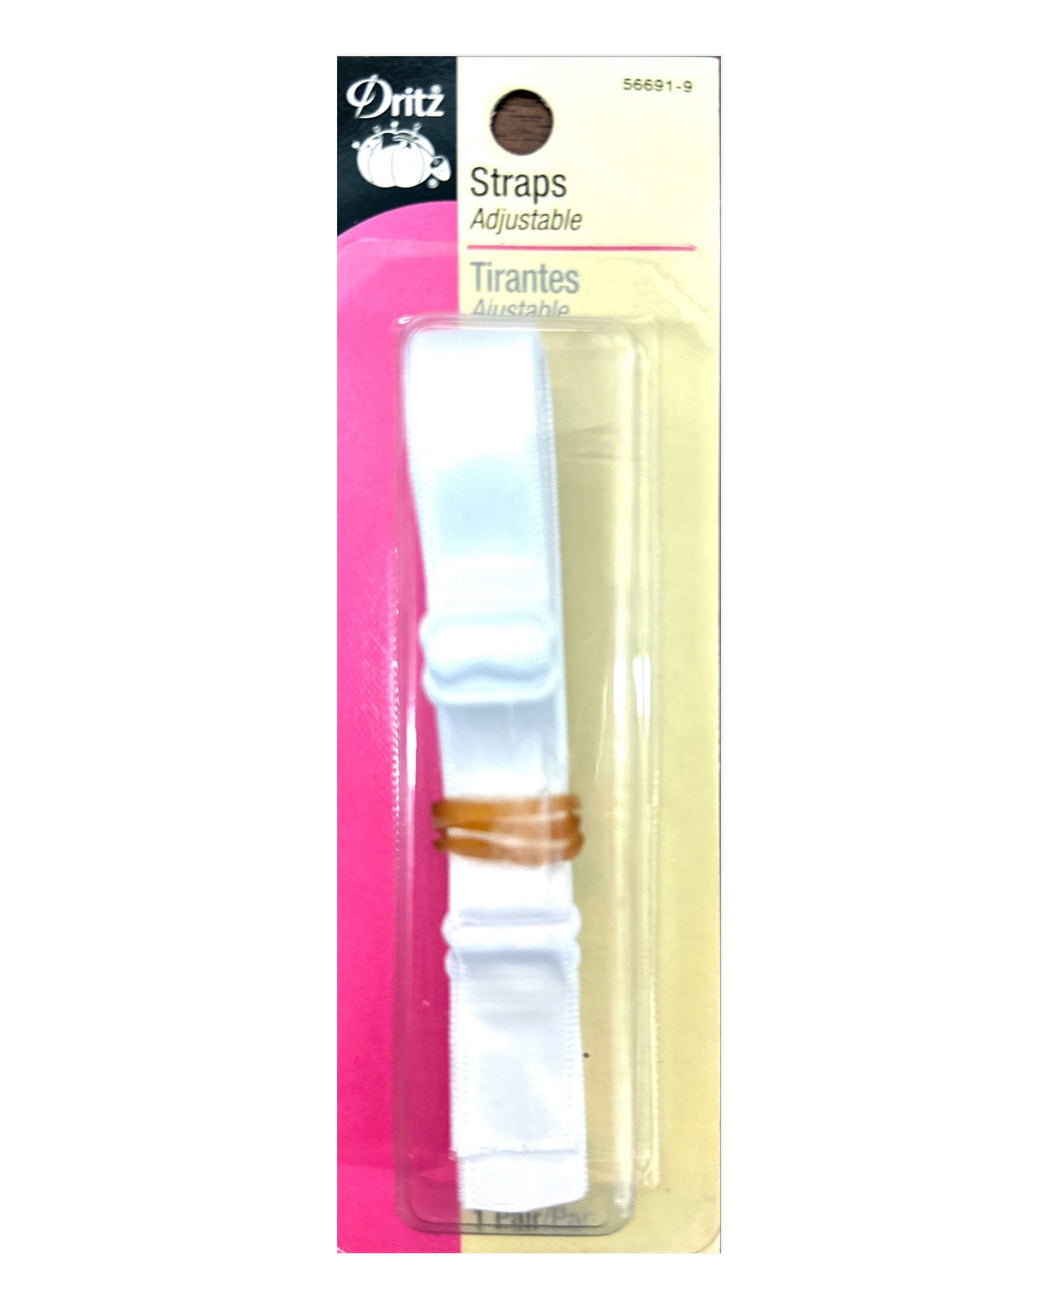 Adjustable Straps - Zipper and Thread